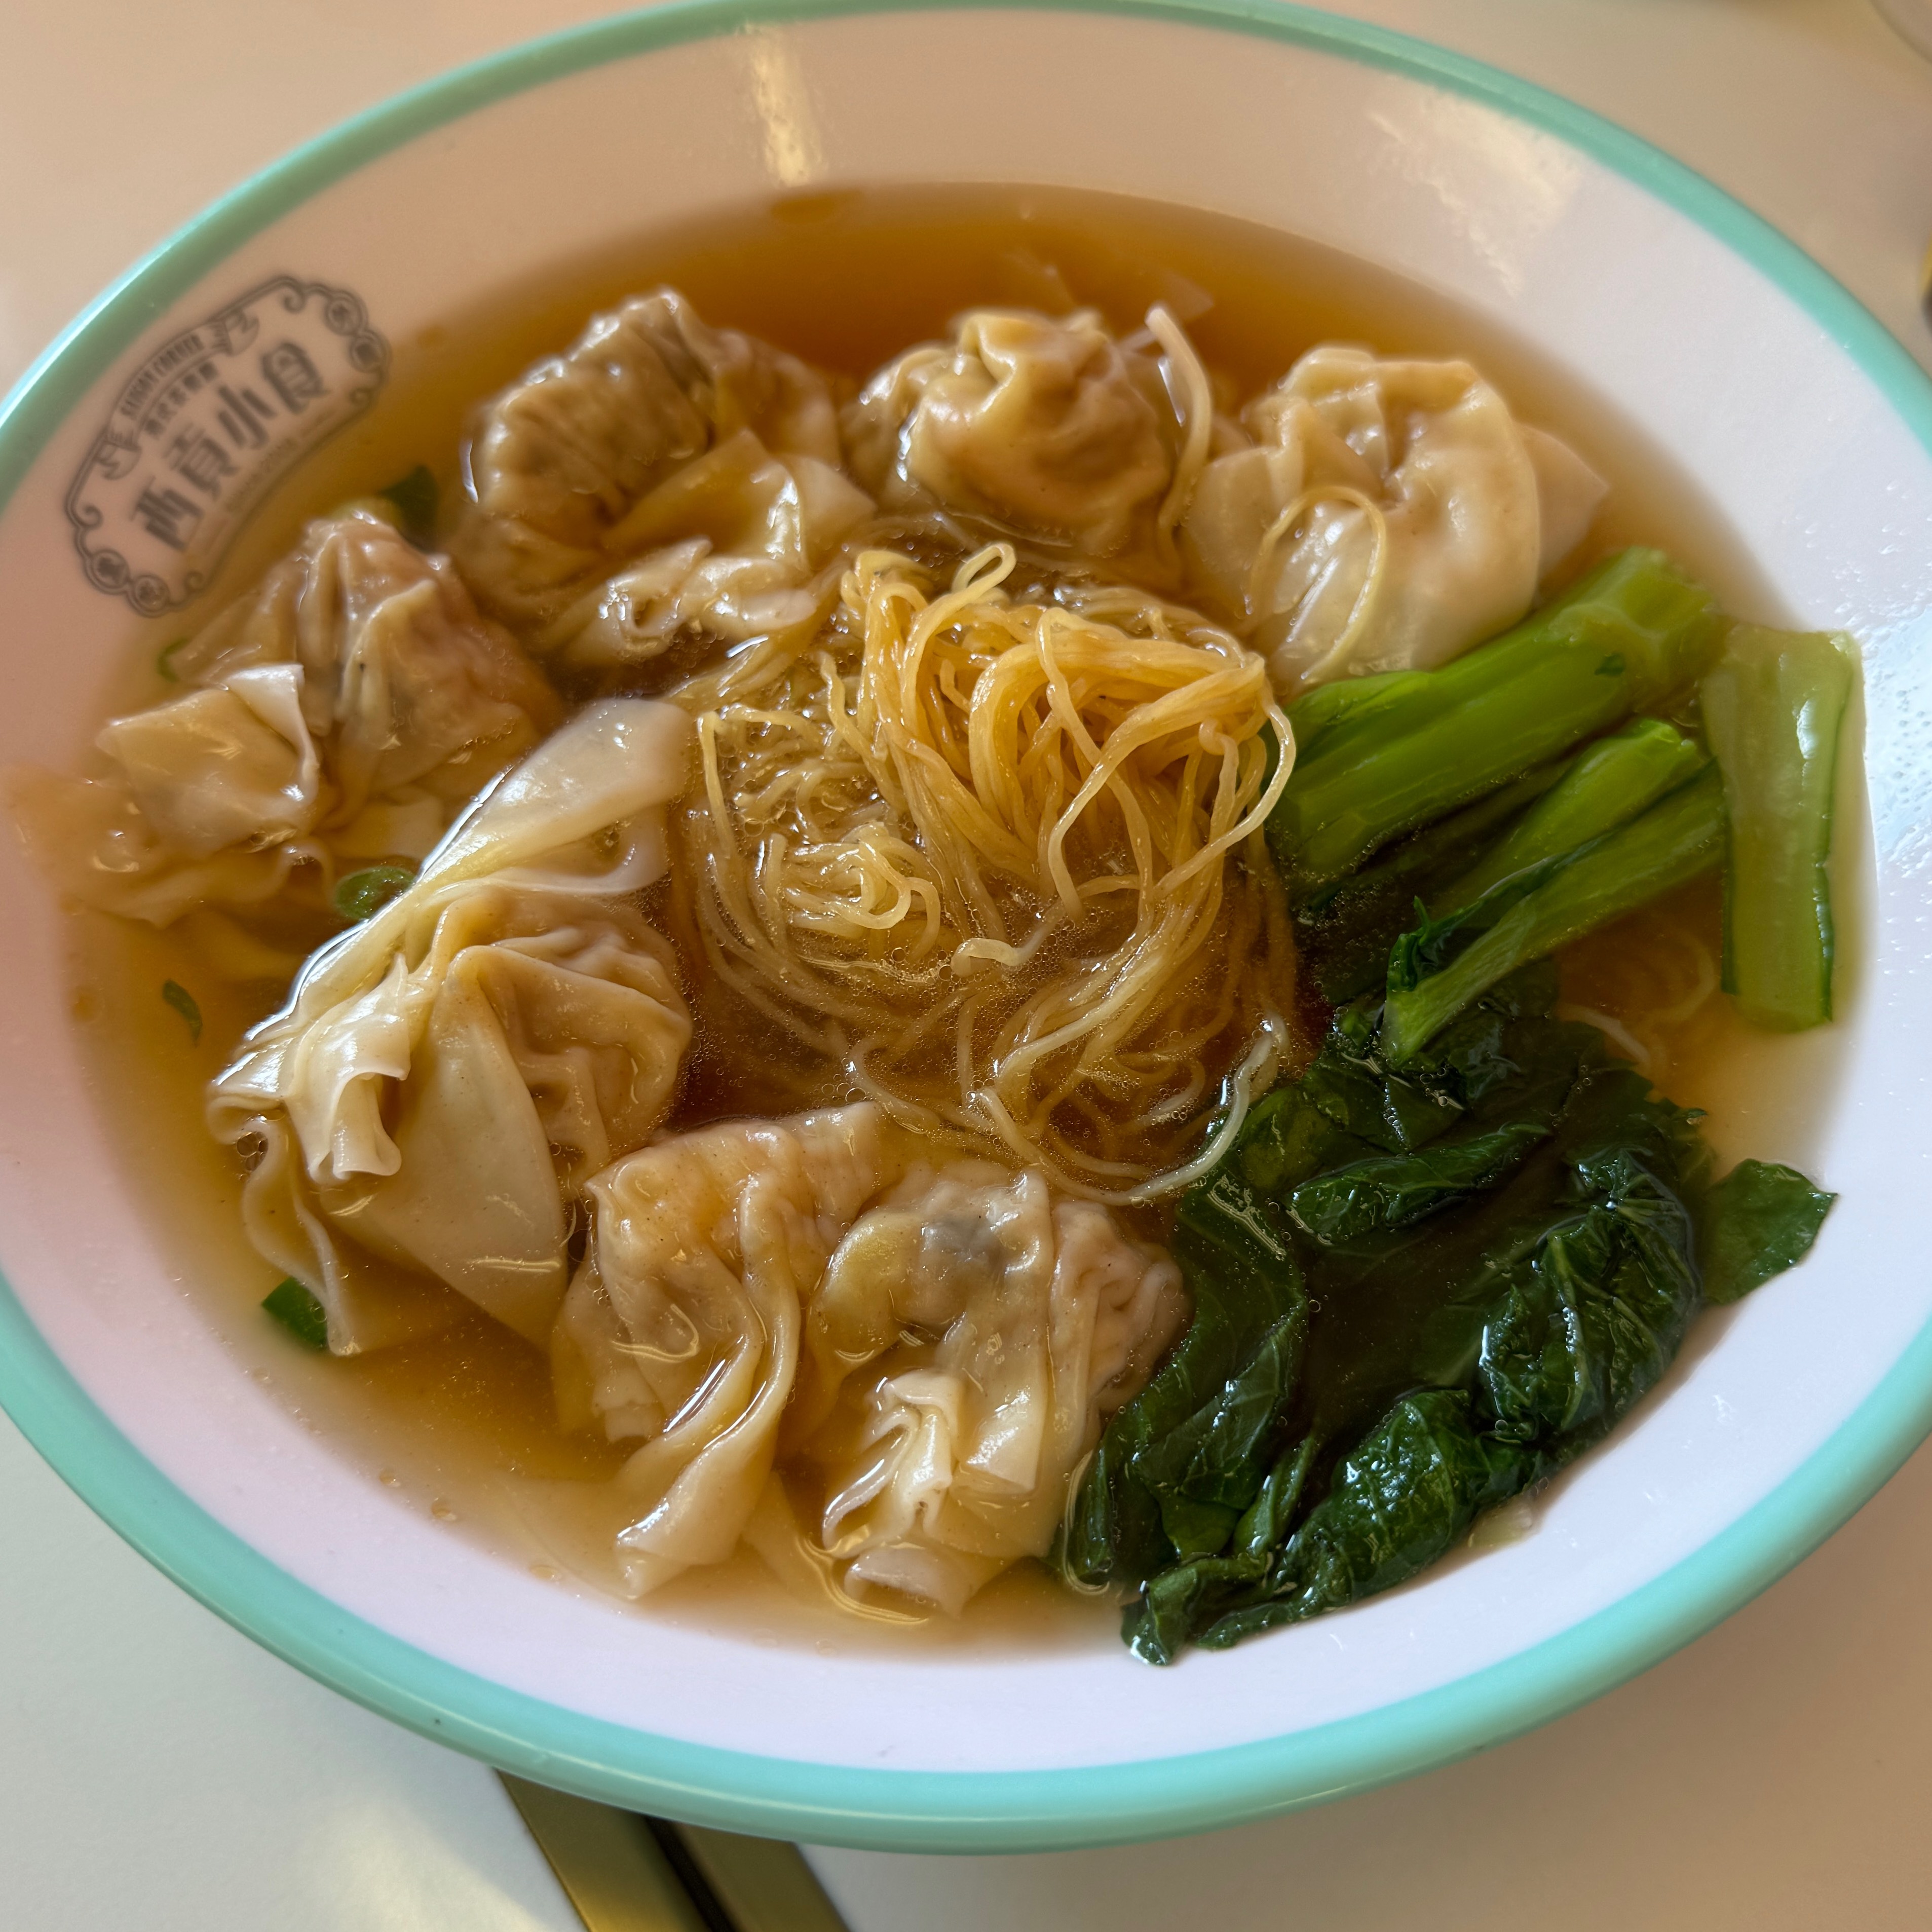 Dumpling & Wonton Noodle Soup $10 from Saigon corner on #foodmento http://foodmento.com/dish/57324